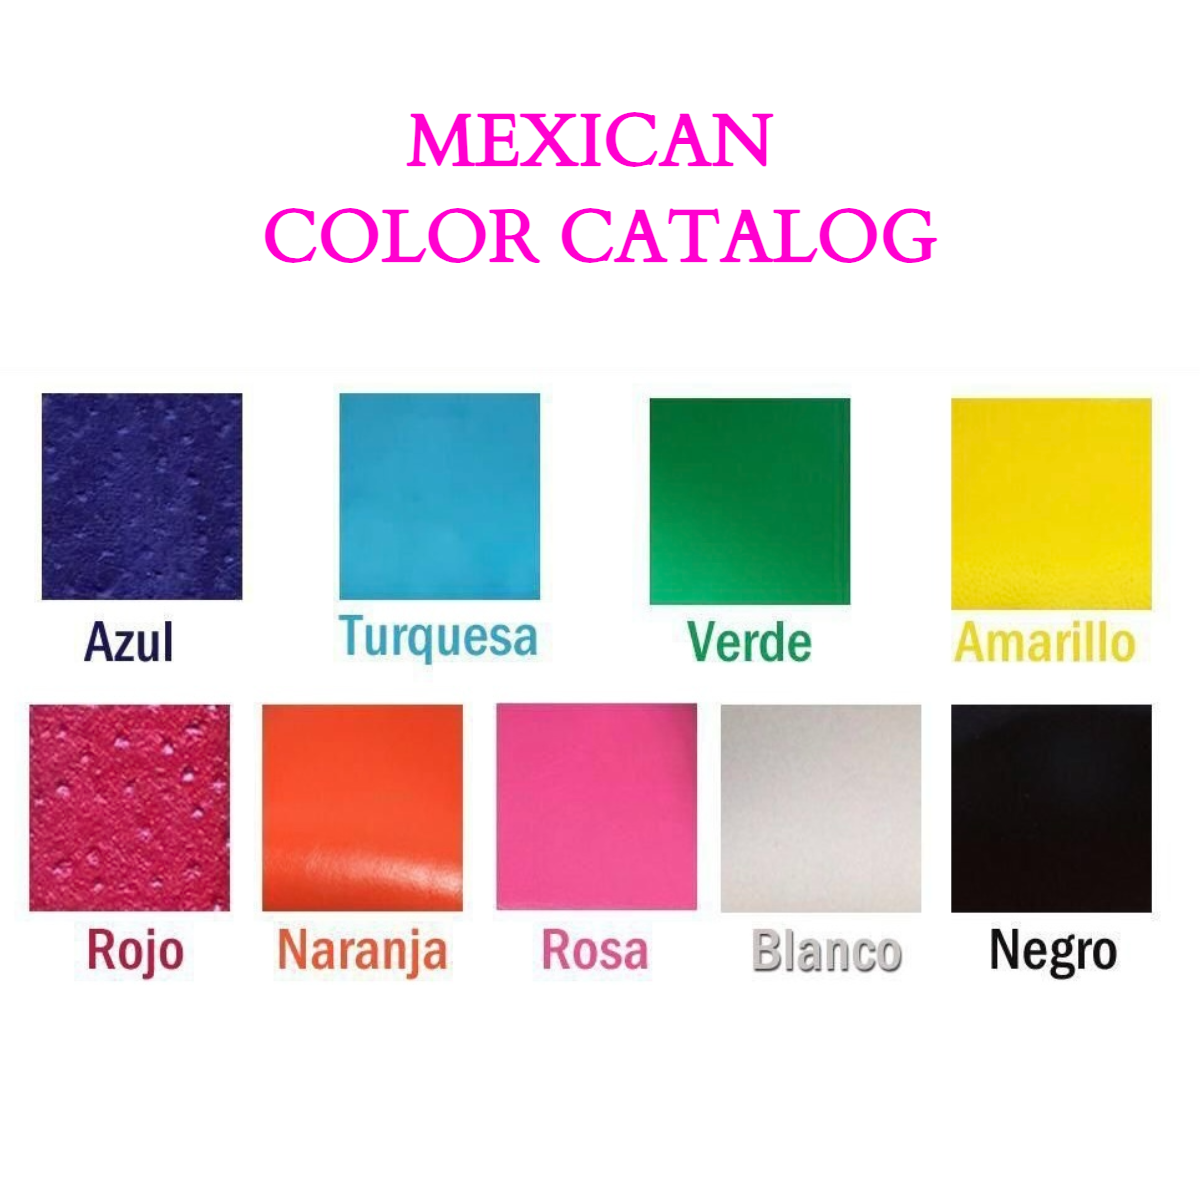 Mexican Handmade Cushioned Equipal Cancun Chairs- Otomi Tenango Fabric MeXican Artisan Fashion & Design